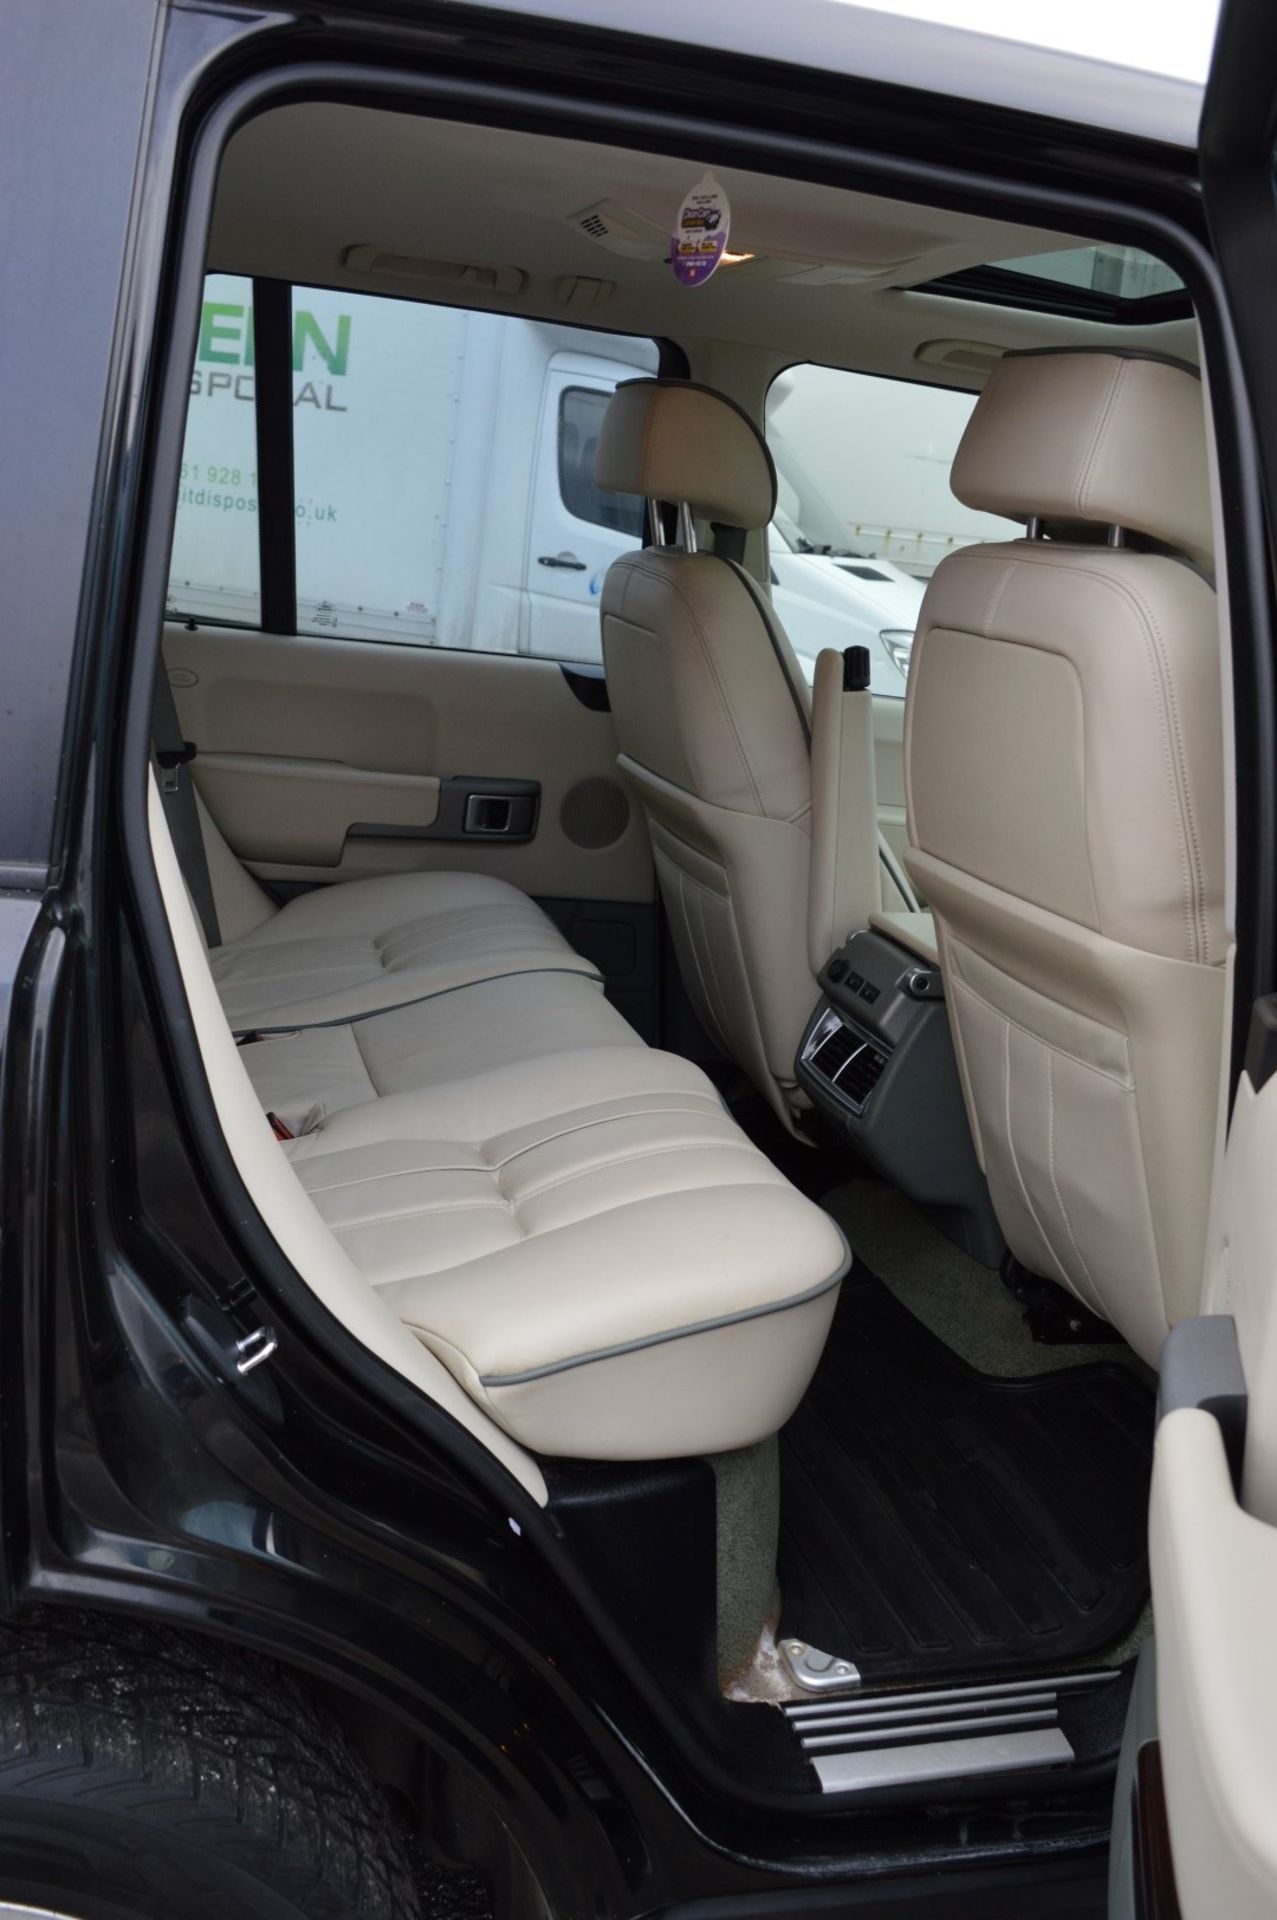 1 x Range Rover Vogue V8 4.4 Automatic - Black, Leather Interior, Petrol, Television, Premium - Image 61 of 63